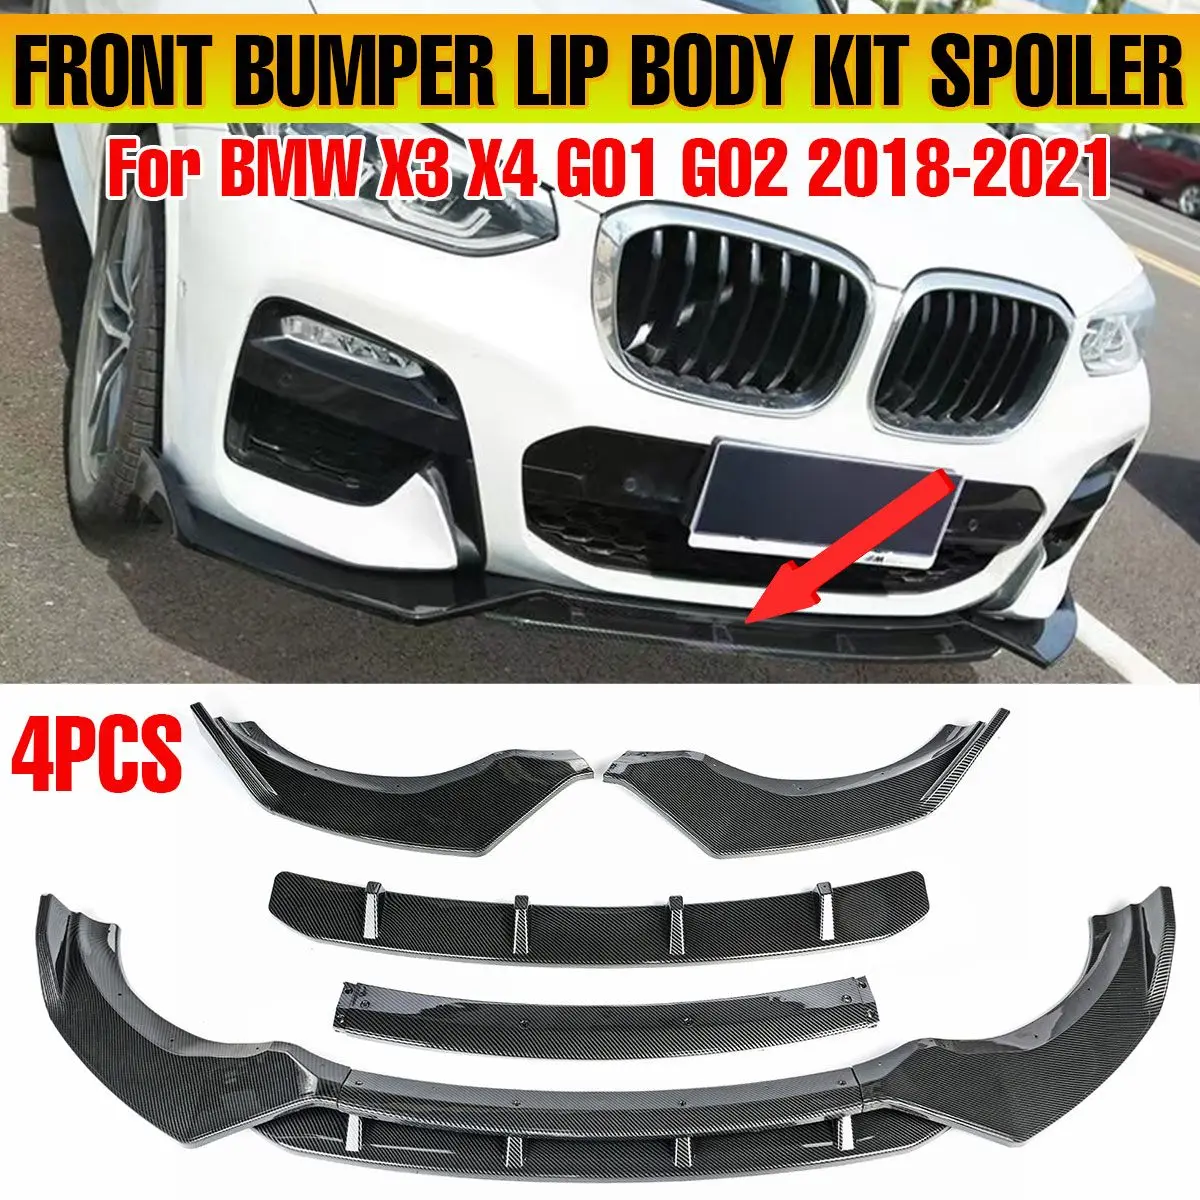 

For BMW X3 X4 G01 G02 2018-2021 Car Front Bumper Splitter Lip Spoiler Diffuser Guard Protector Cover Body Kits